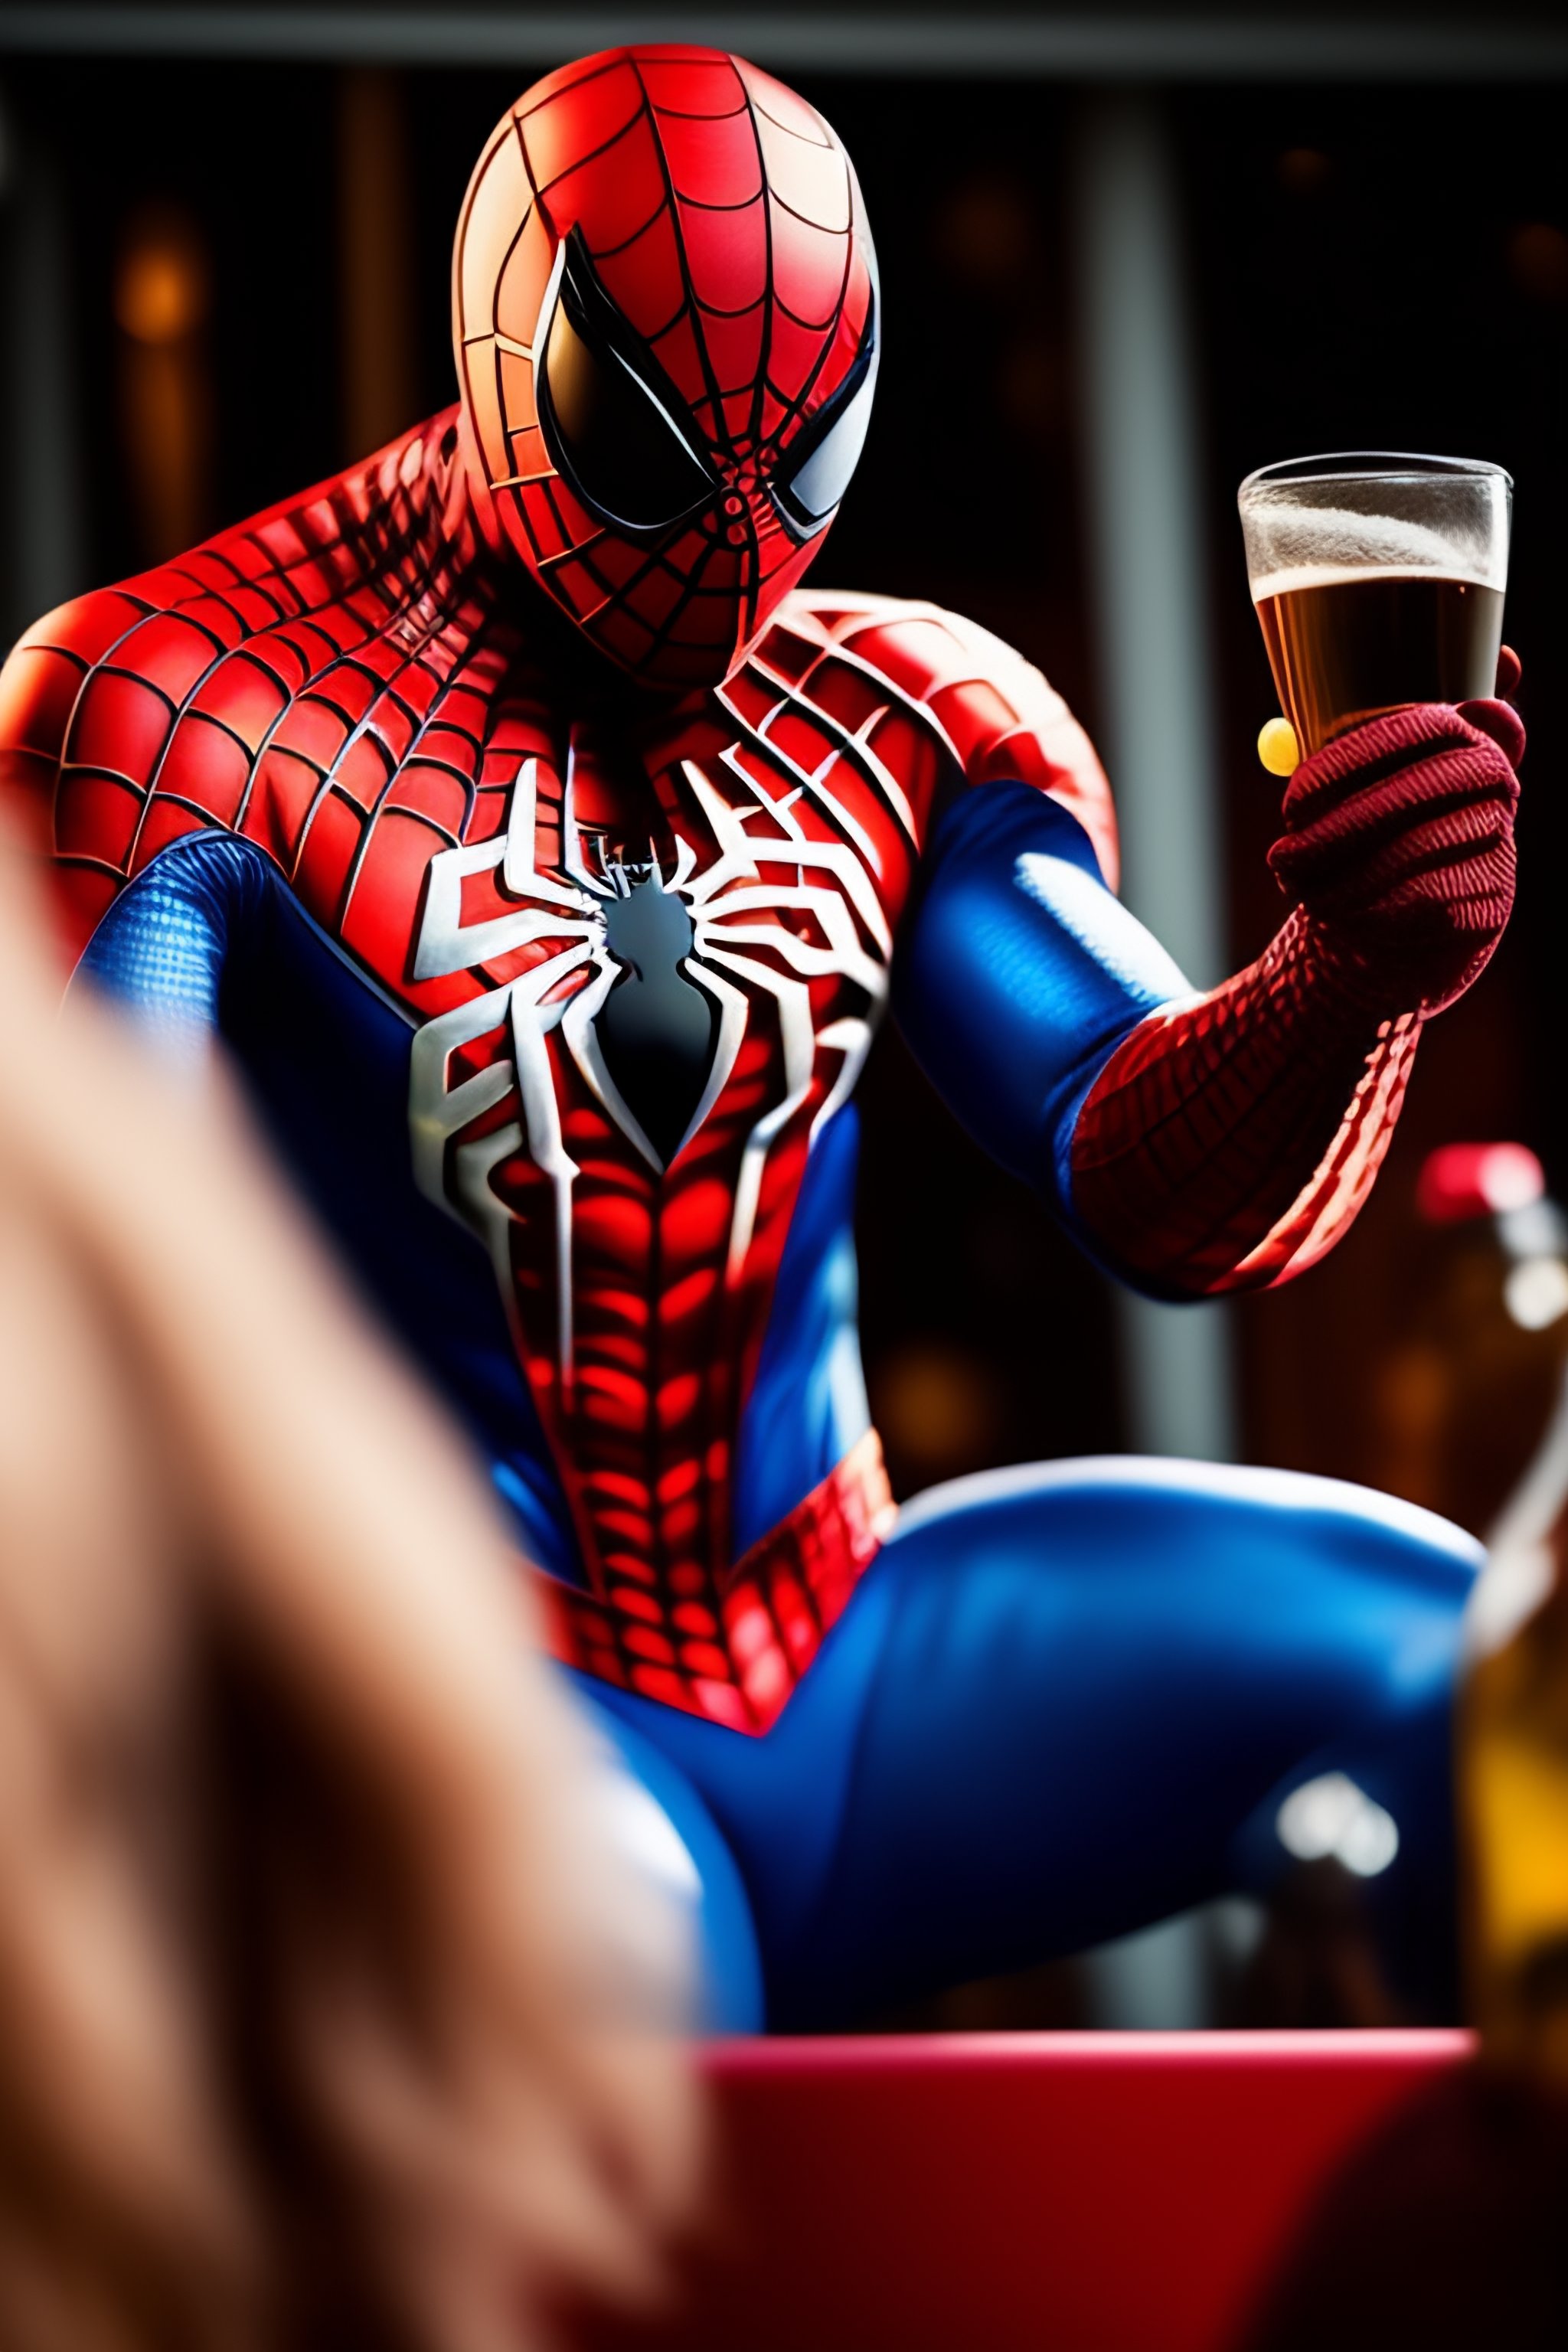 Lexica - Spiderman getting drunk